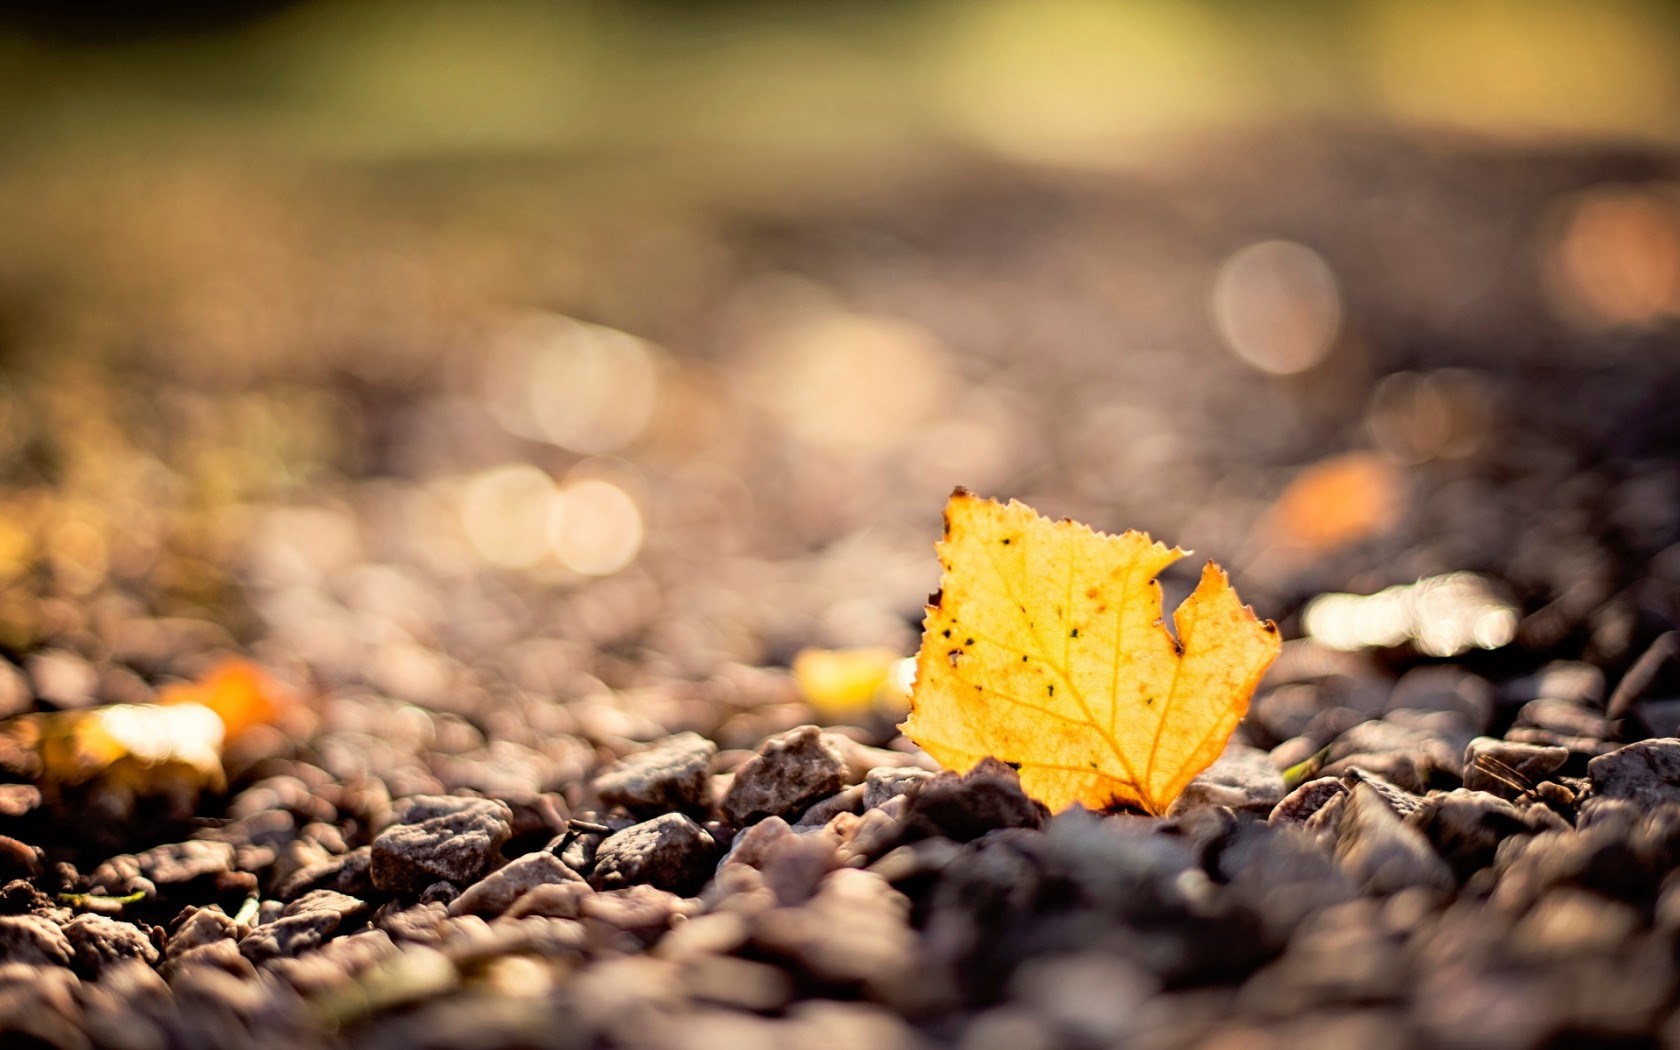 spws_leaf-yellow-stones-autumn-background-1680x1050.jpg